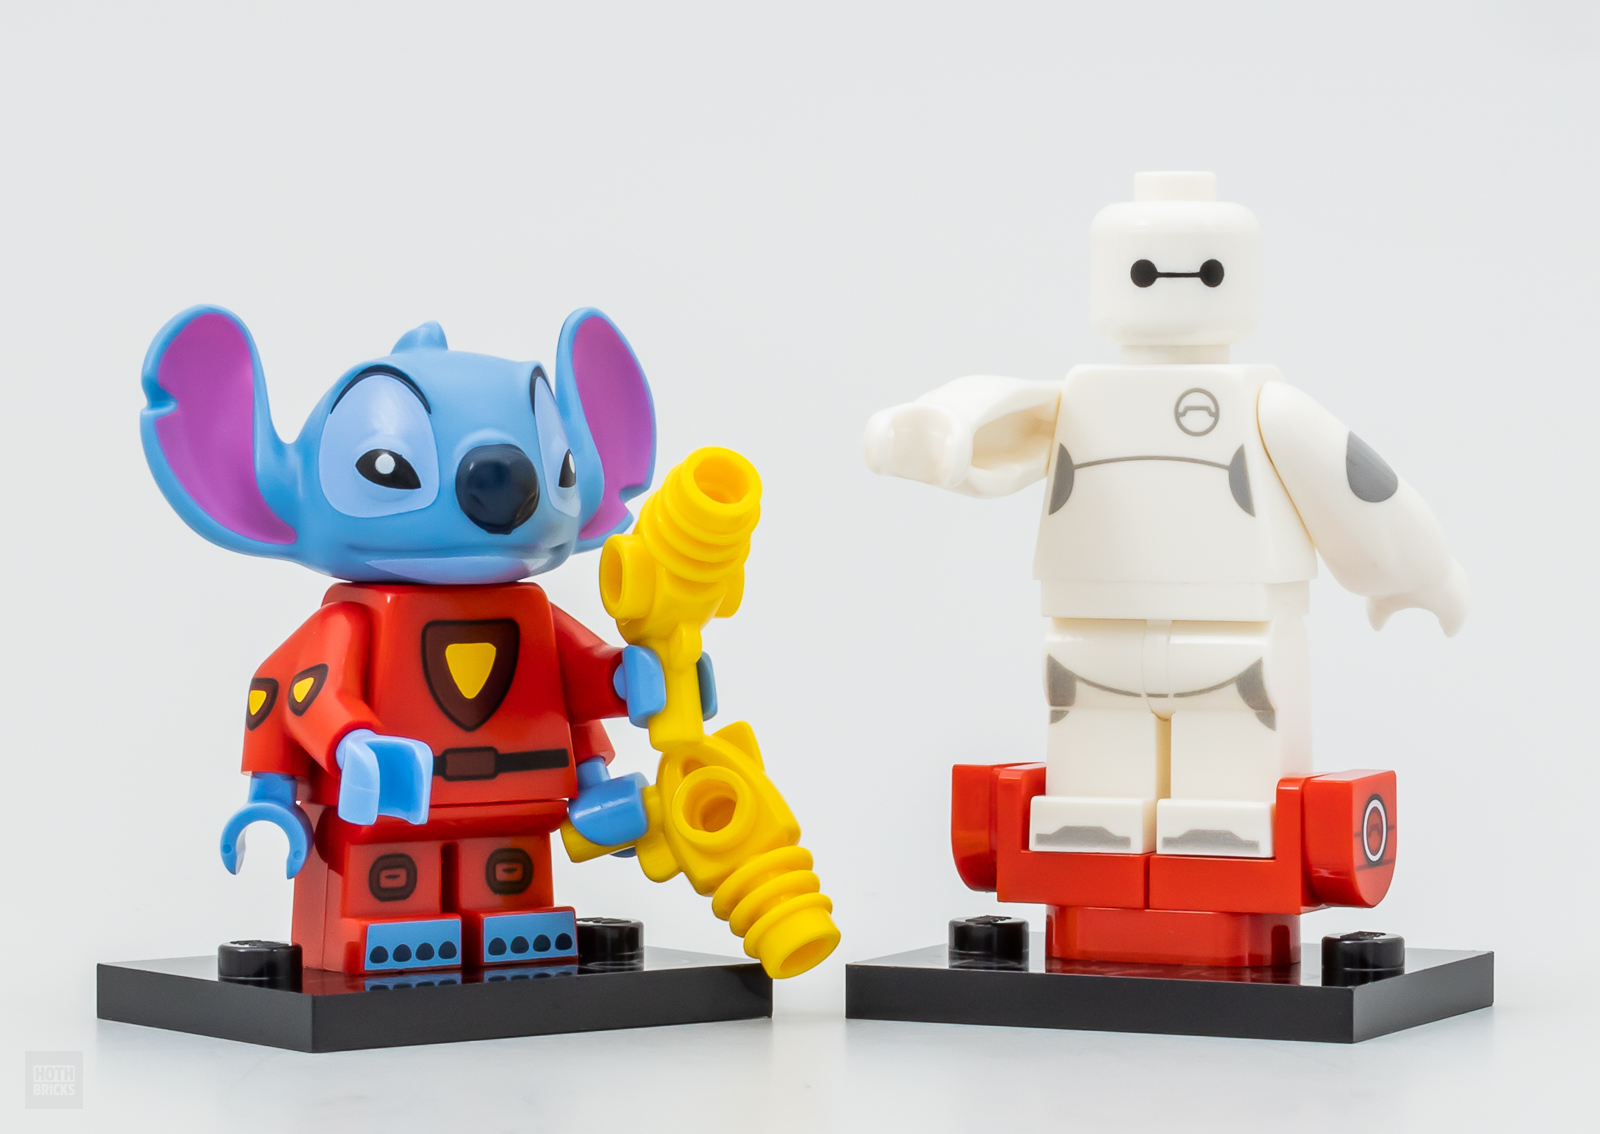 LEGO 71038 Disney 100 Collectable Minifigures (Part 1) review